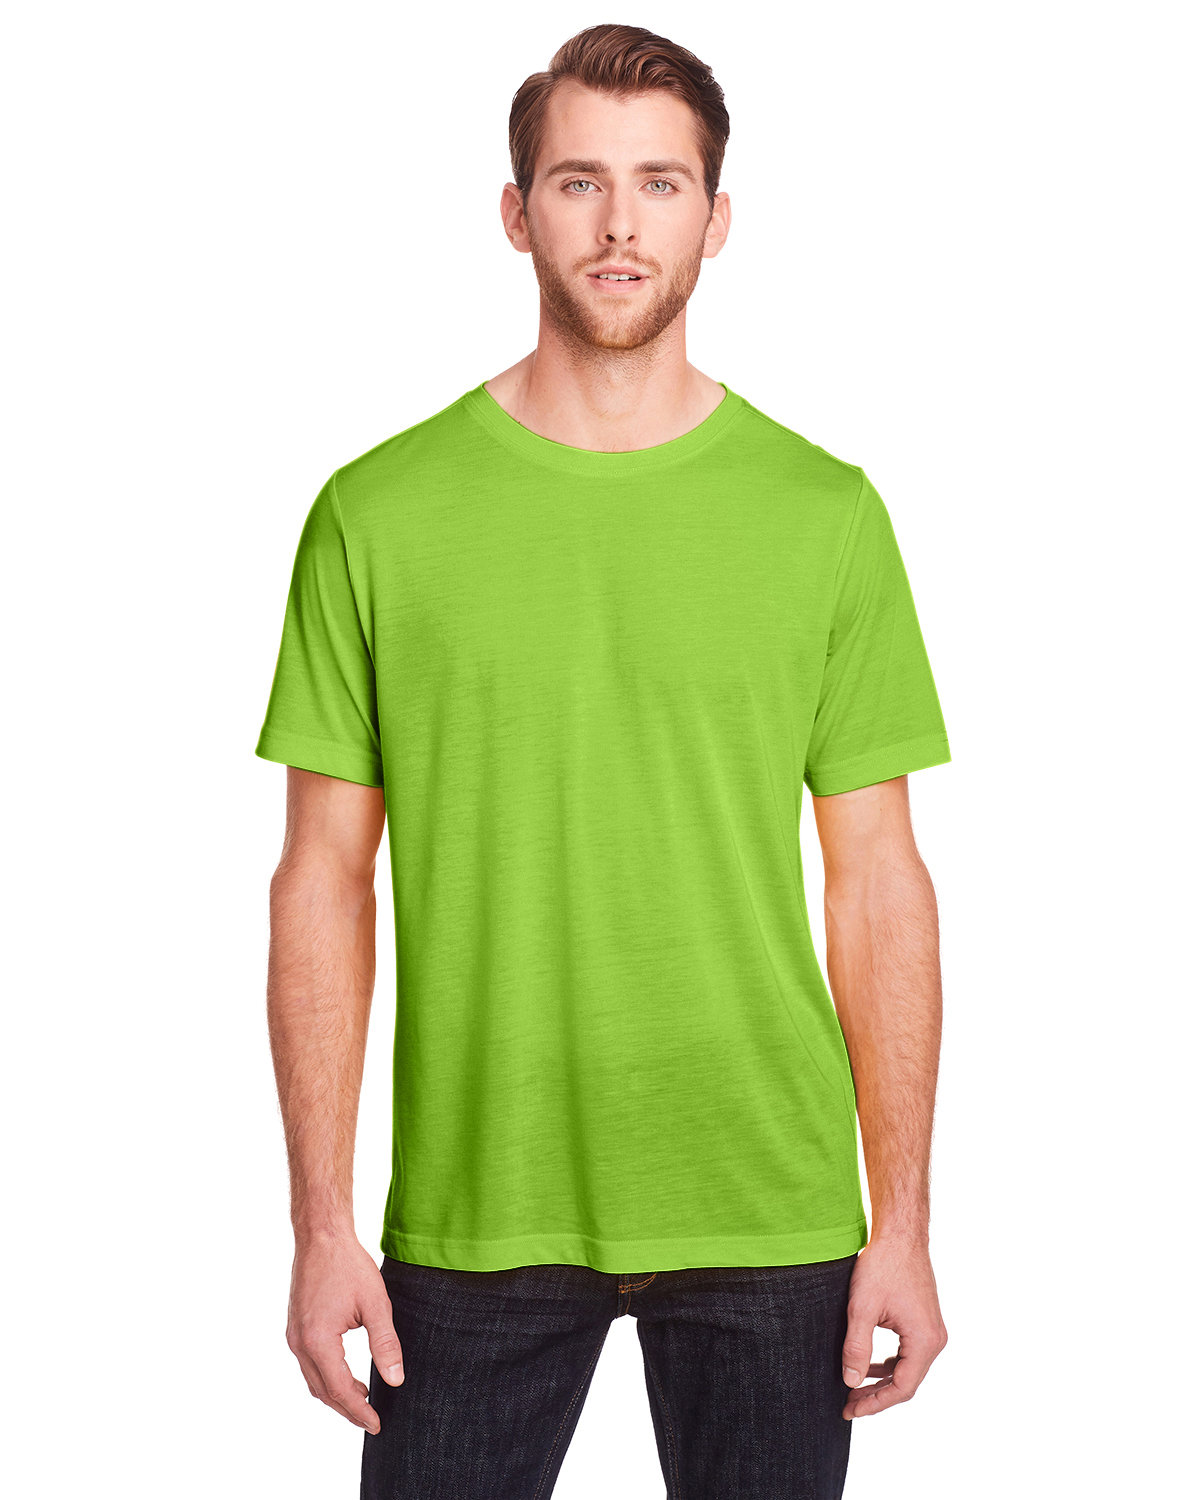 CORE365 Adult Fusion ChromaSoft Performance T-Shirt ACID GREEN 